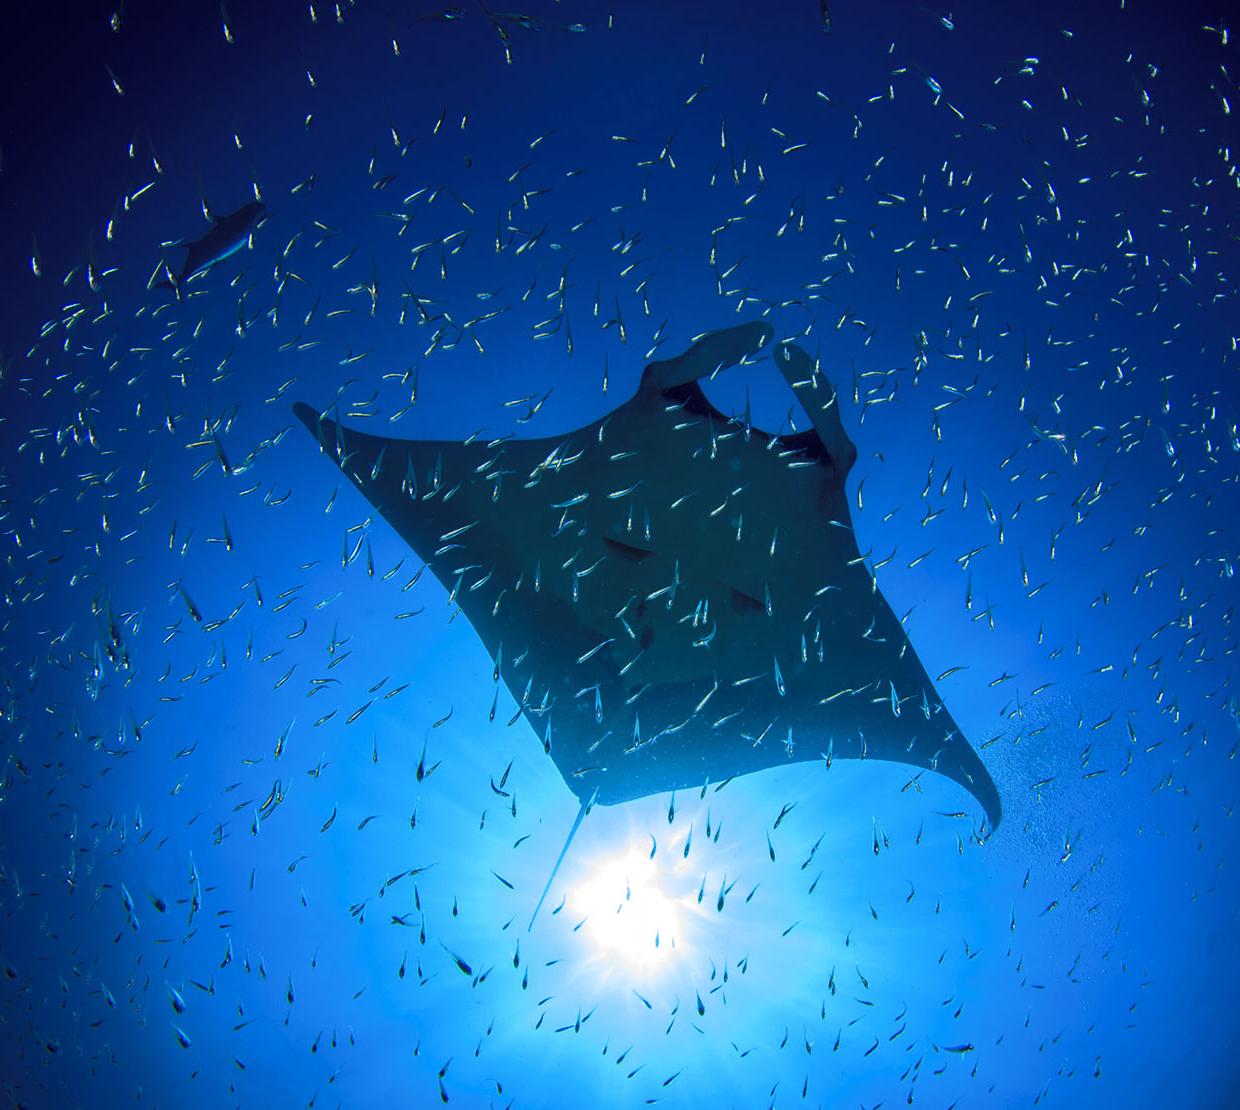 manta ray swimming though krill